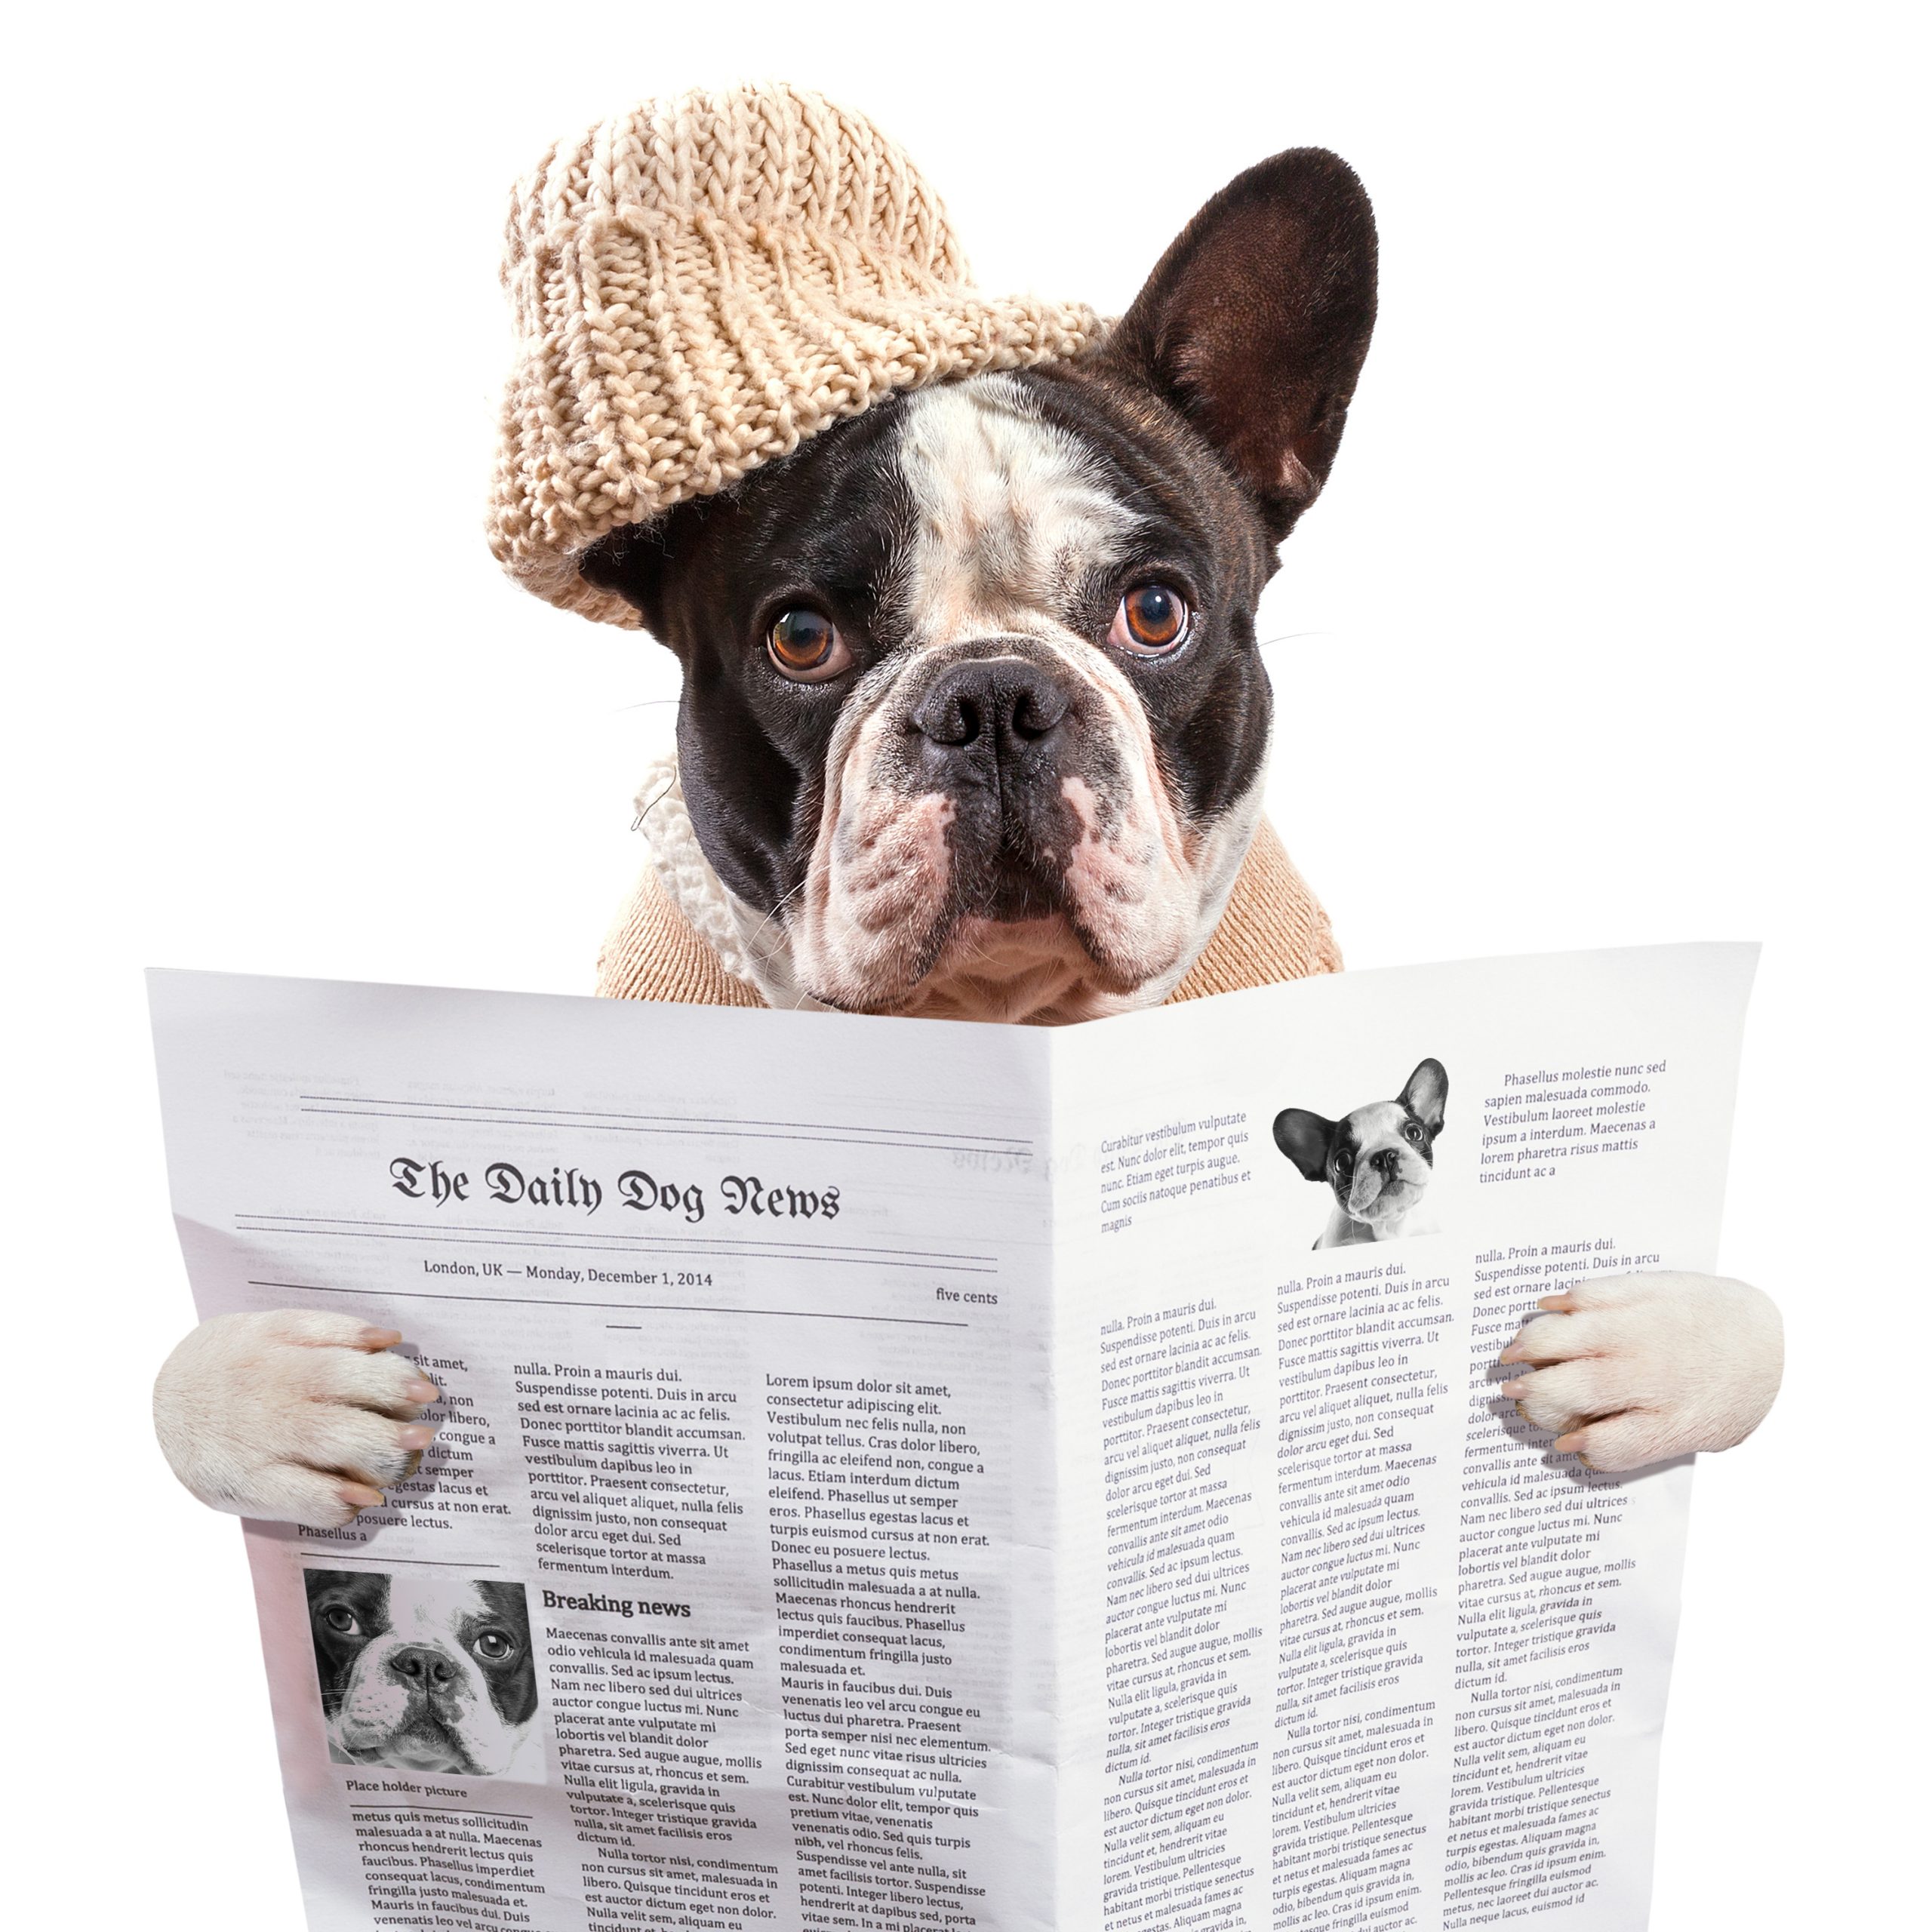 https://depositphotos.com/58564531/stock-photo-french-bulldog-in-hat-reading.html